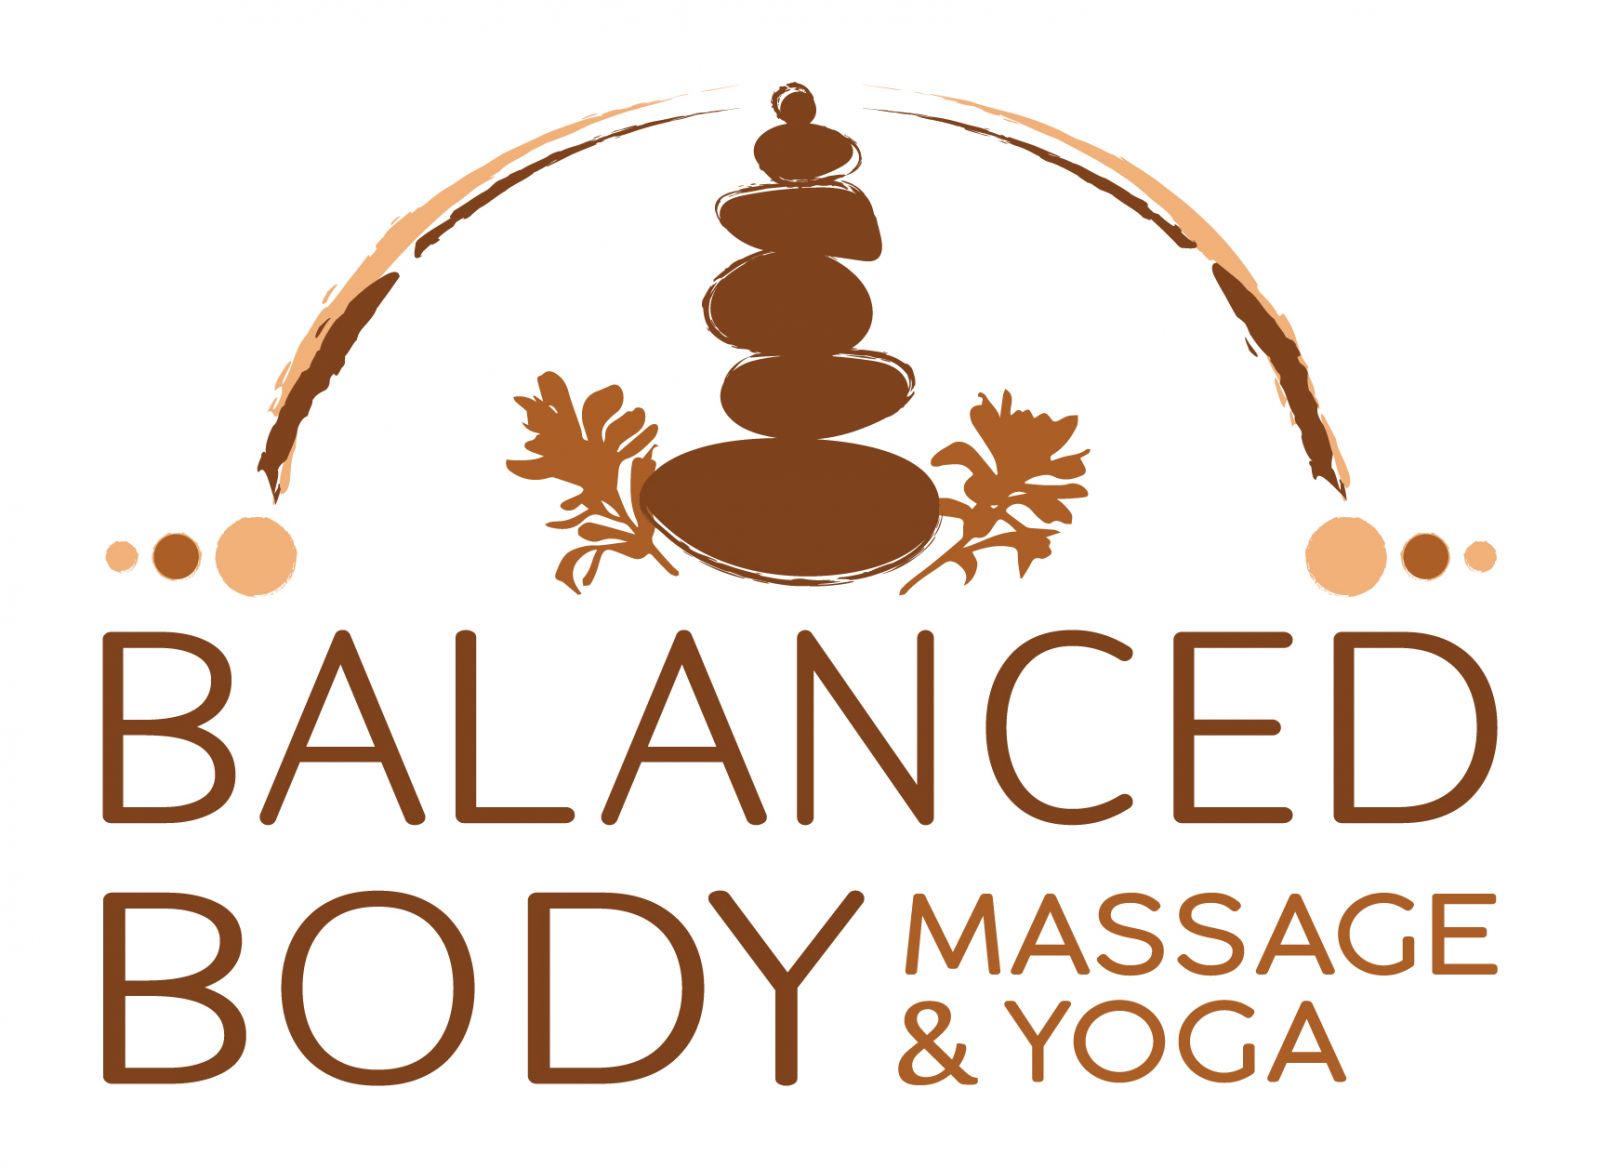 Balanced Body Massage And Yoga